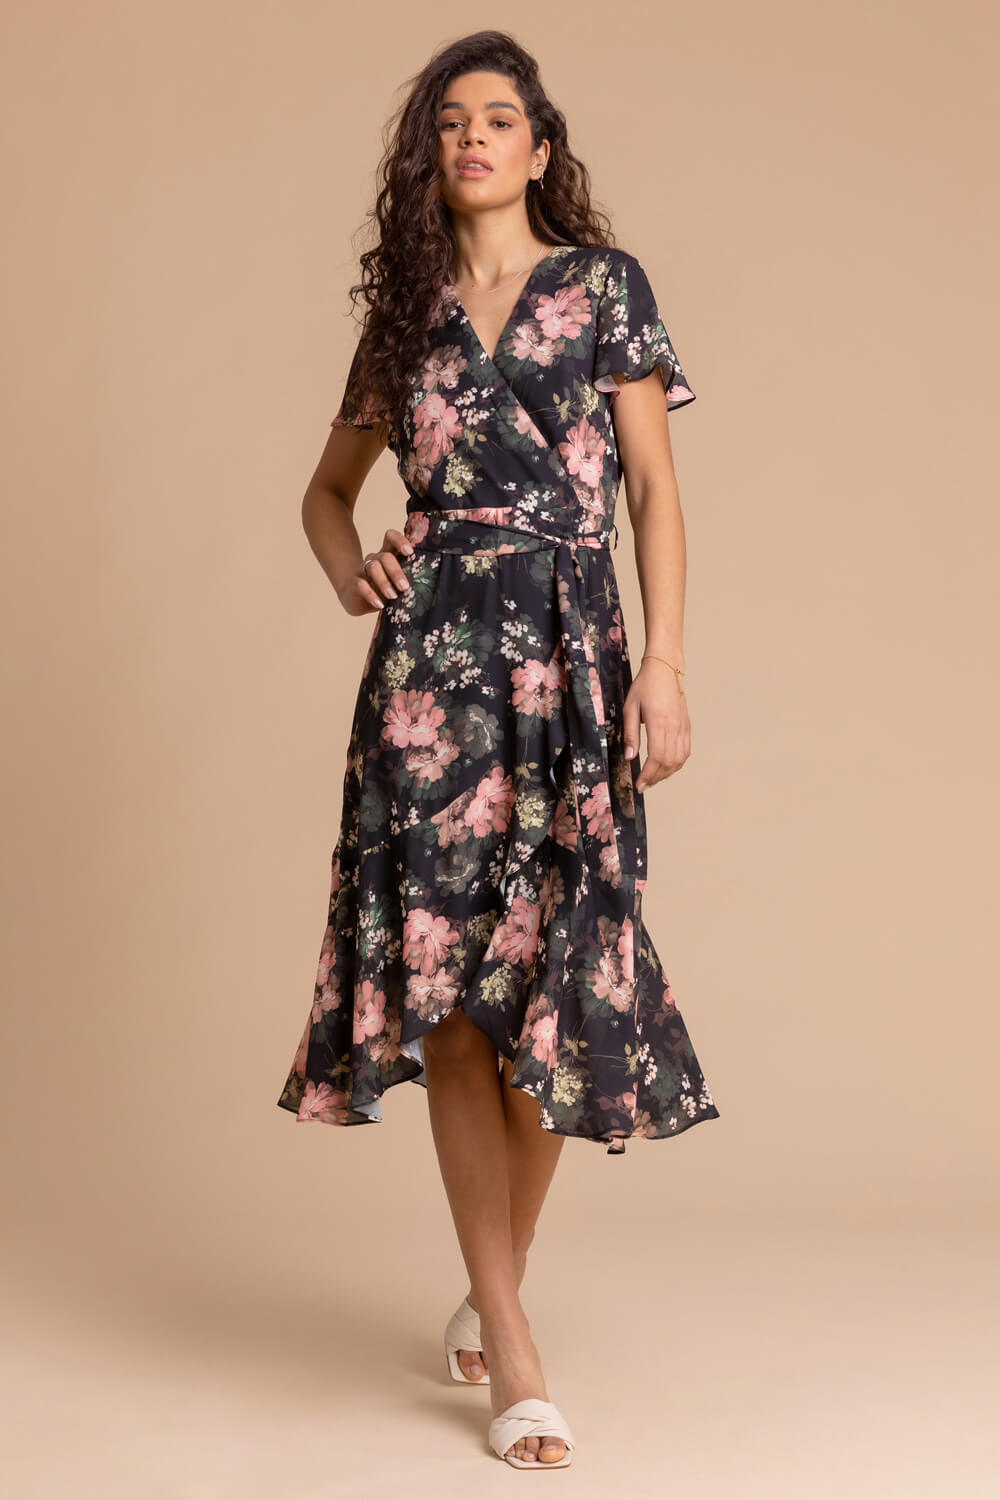 PINK Floral Print Wrap Midi Dress, Image 3 of 5